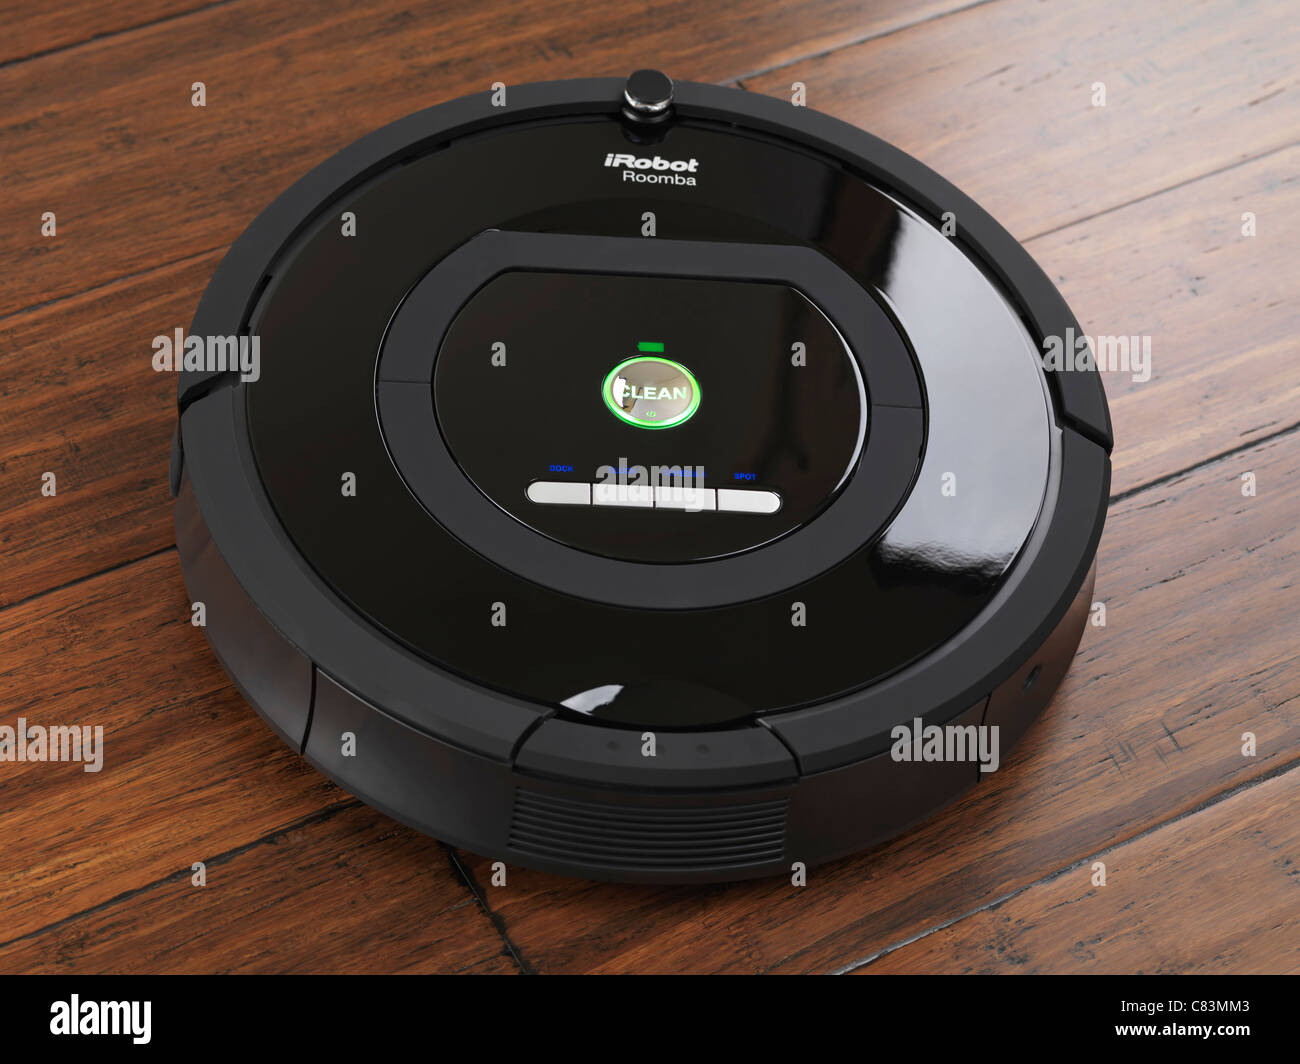 Irobot Roomba 770 Household Vacuum Cleaning Robot On Hardwood